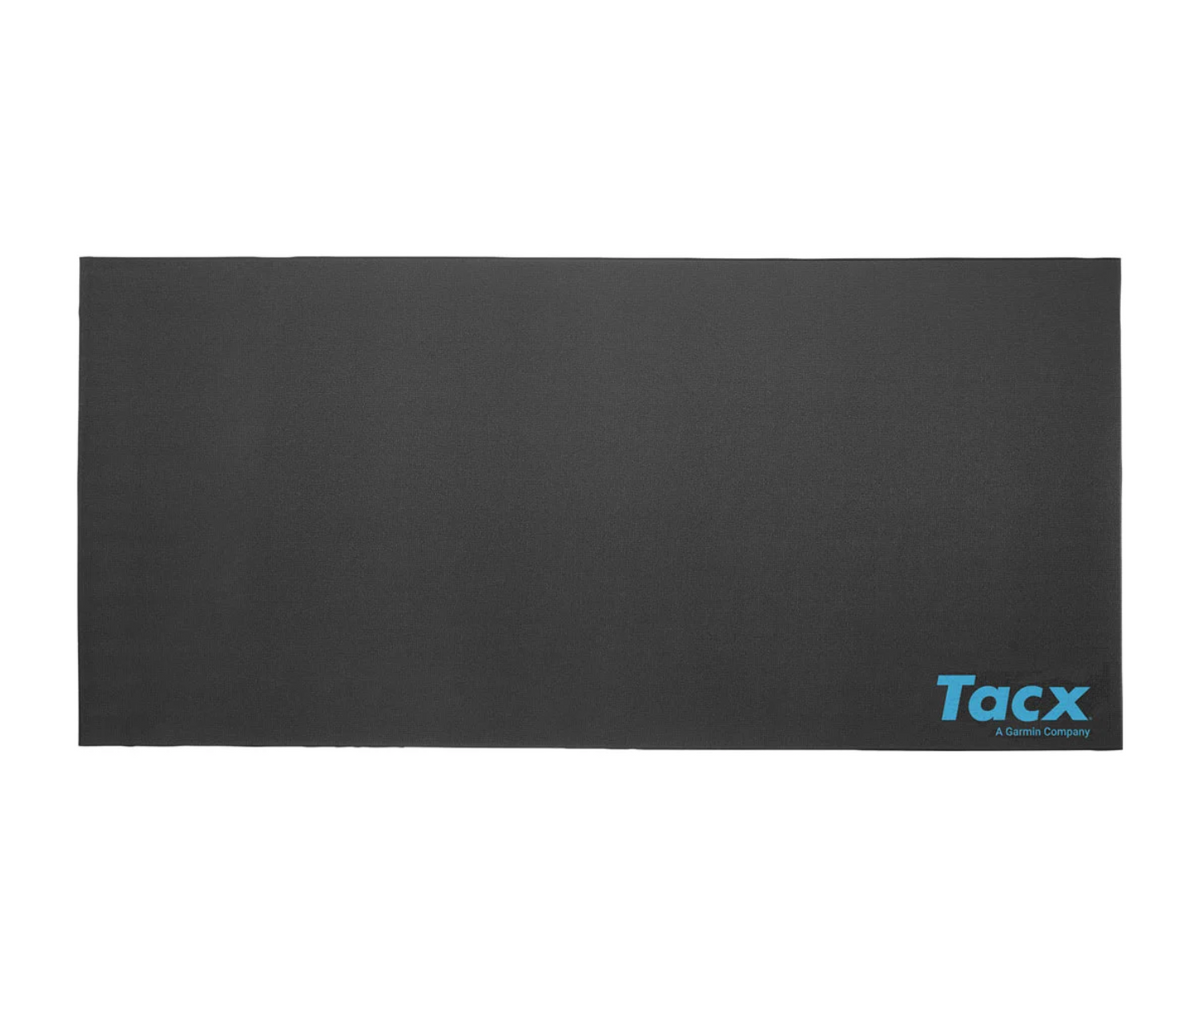 Tacx Trainer Mat